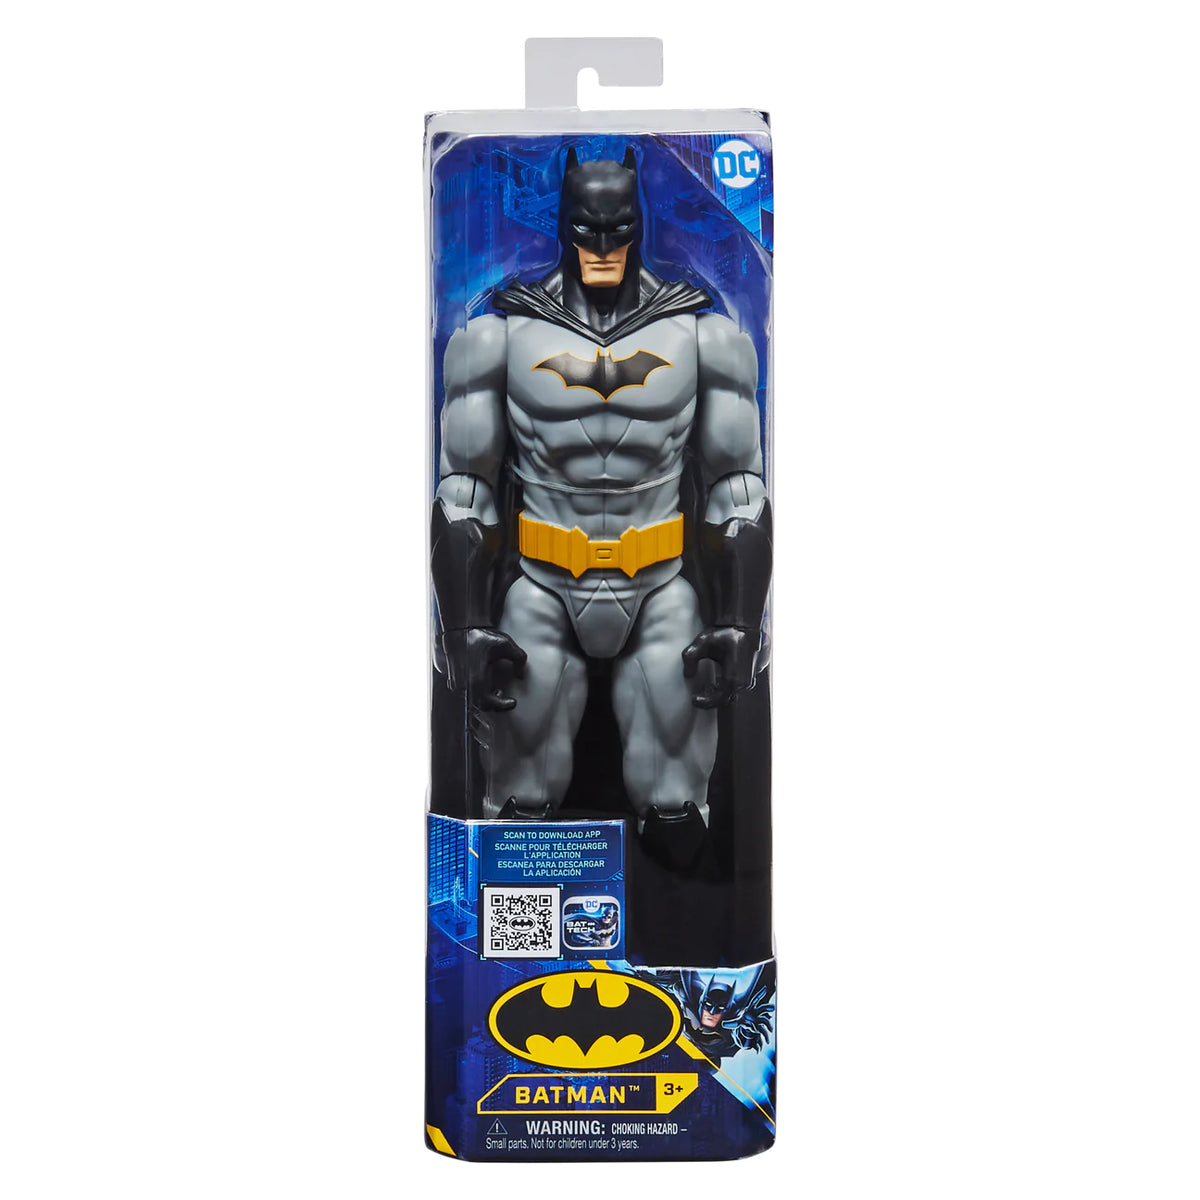 DC BATMAN FIGURINE 12” – tag-along-toys